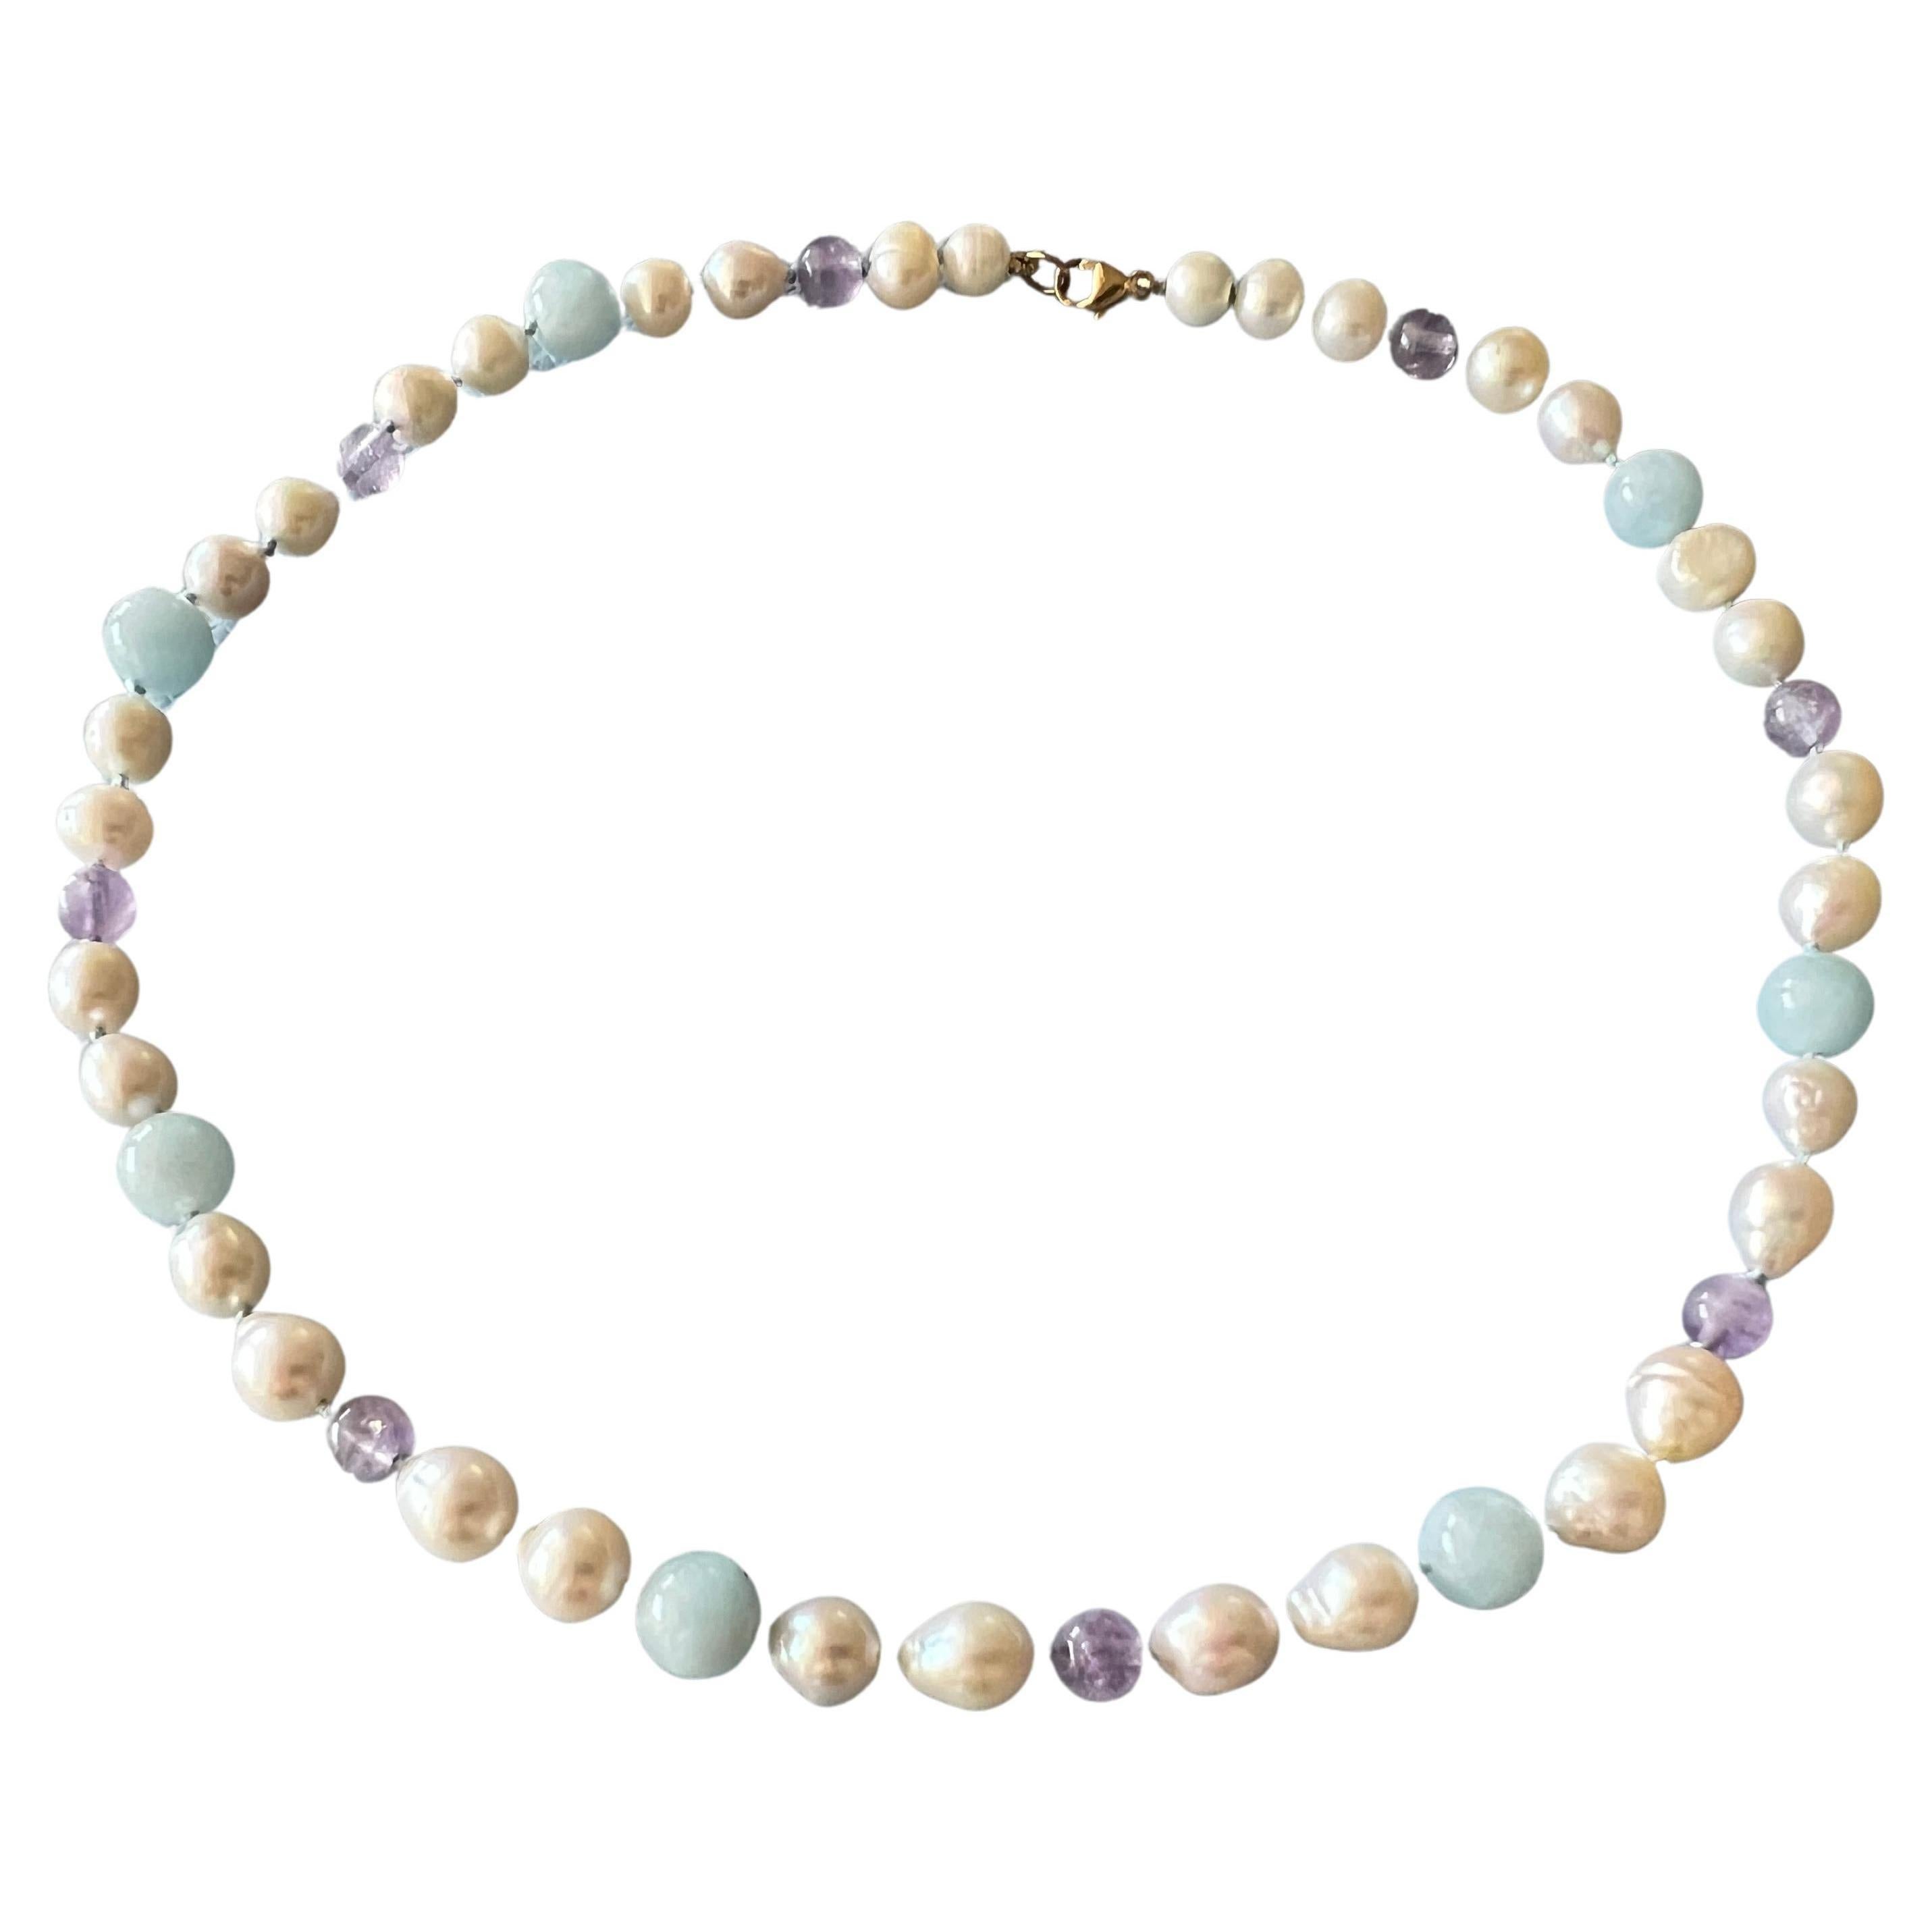 Aquamarin Amethyst Perle Choker Perlenkette Gold gefüllt J Dauphin

Länge: Halskette 16